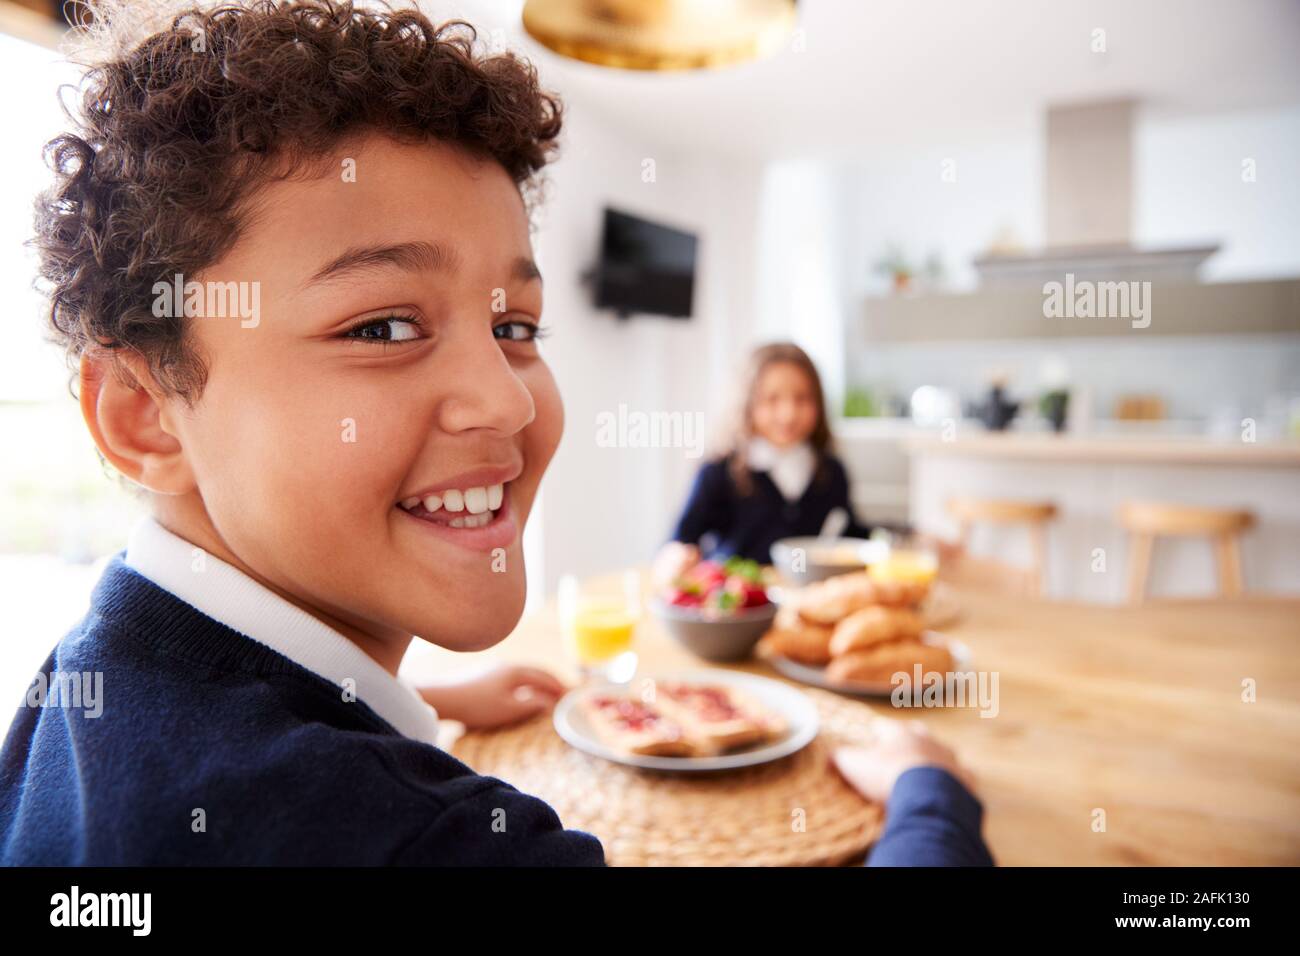 Portrait Of Children Wearing Uniform In Kitchen Eating Breakfast Before Going To School Stock Photo